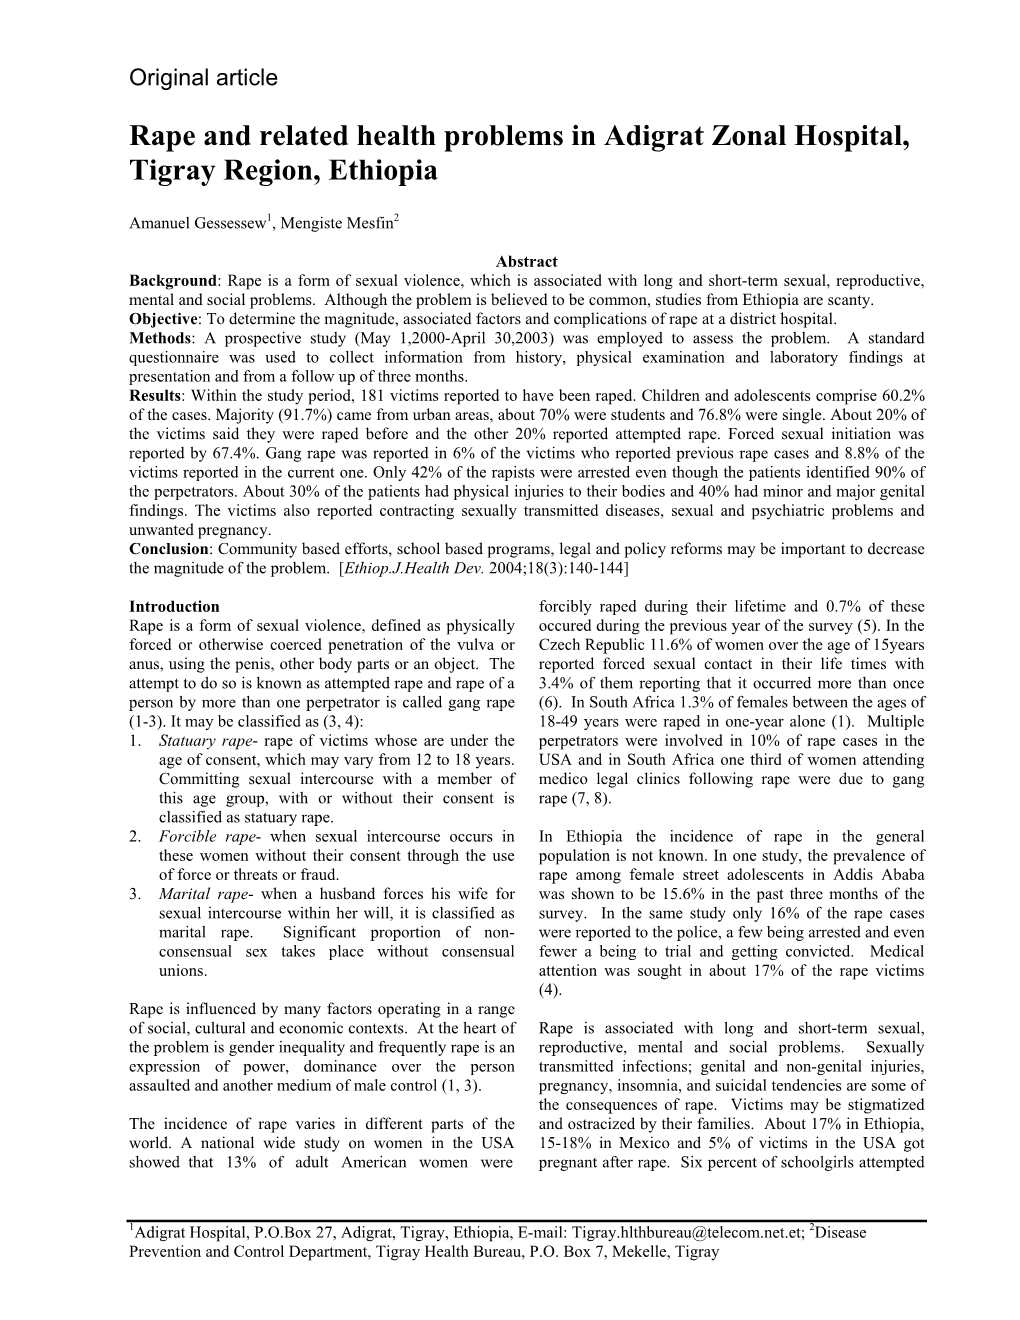 Rape and Related Health Problems in Adigrat Zonal Hospital, Tigray Region, Ethiopia